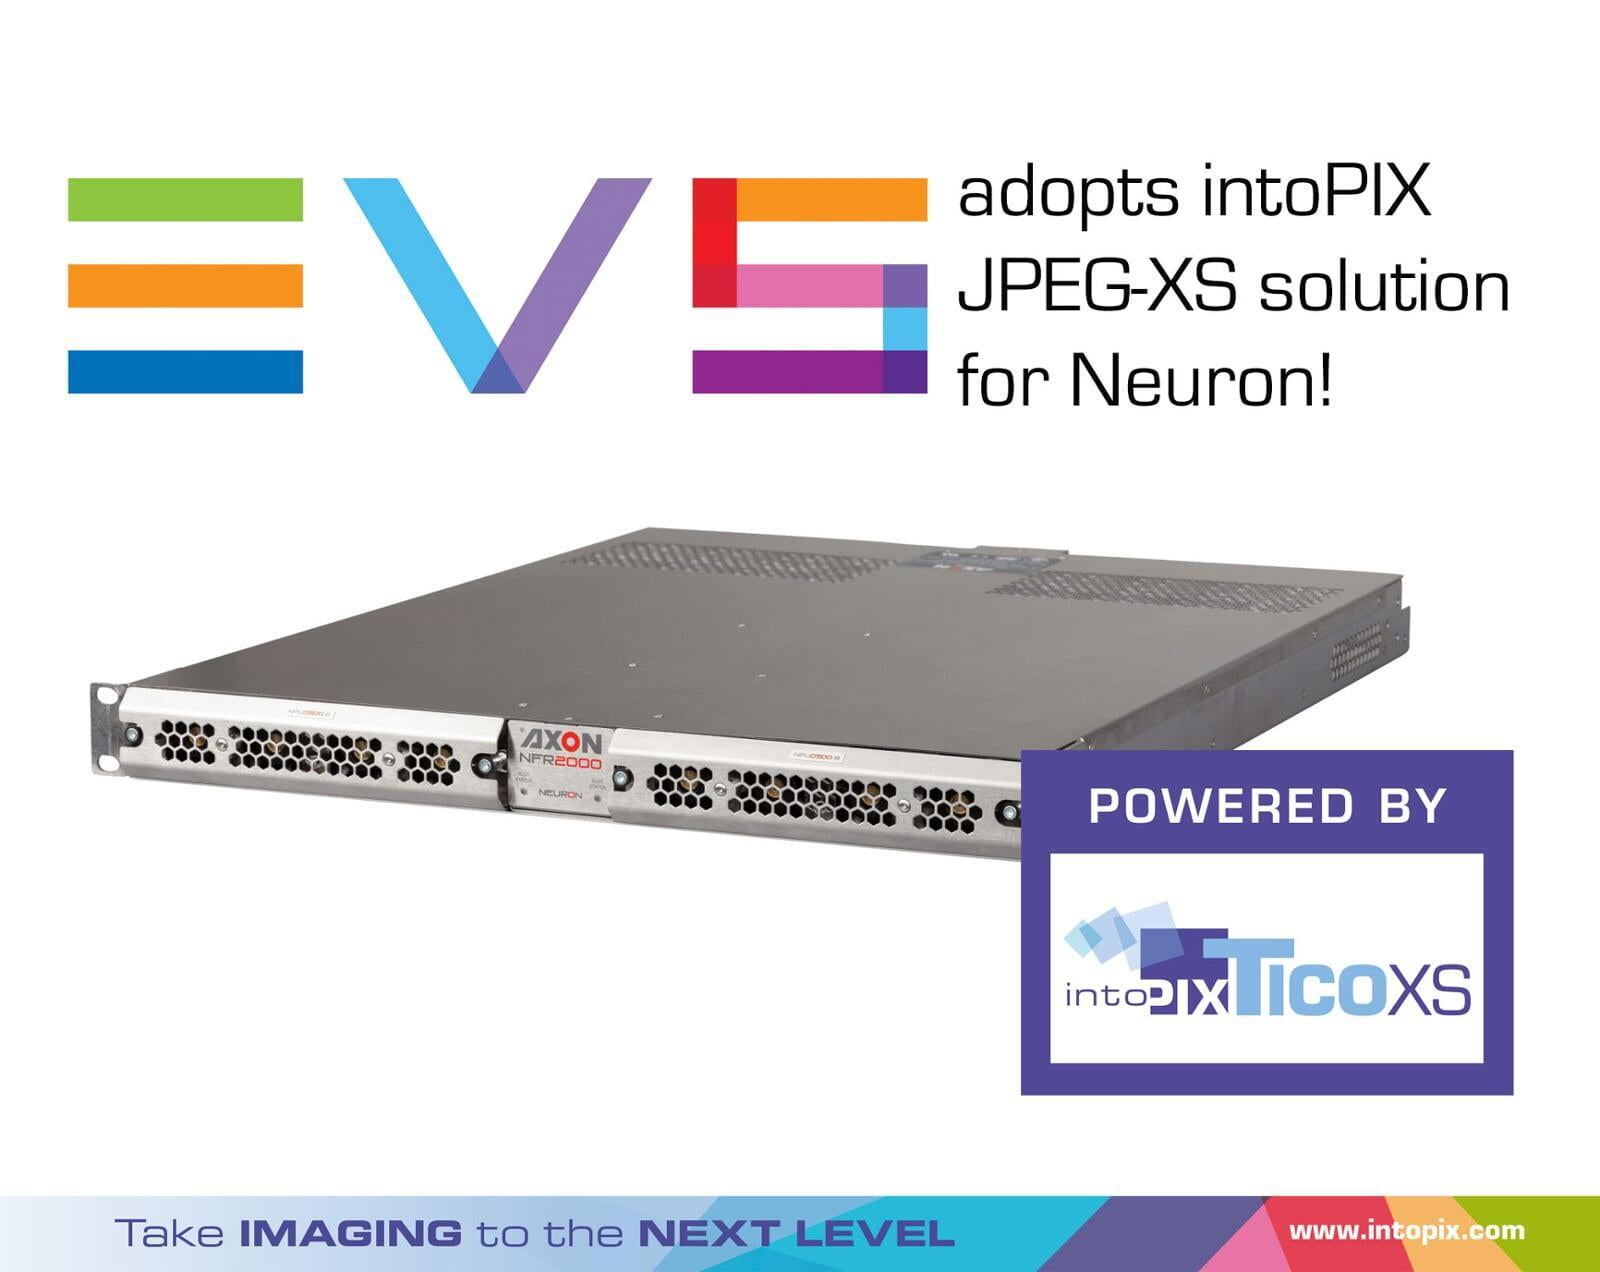 EVS Media Infrastructure adopts intoPIX JPEG-XS solution for Neuron 